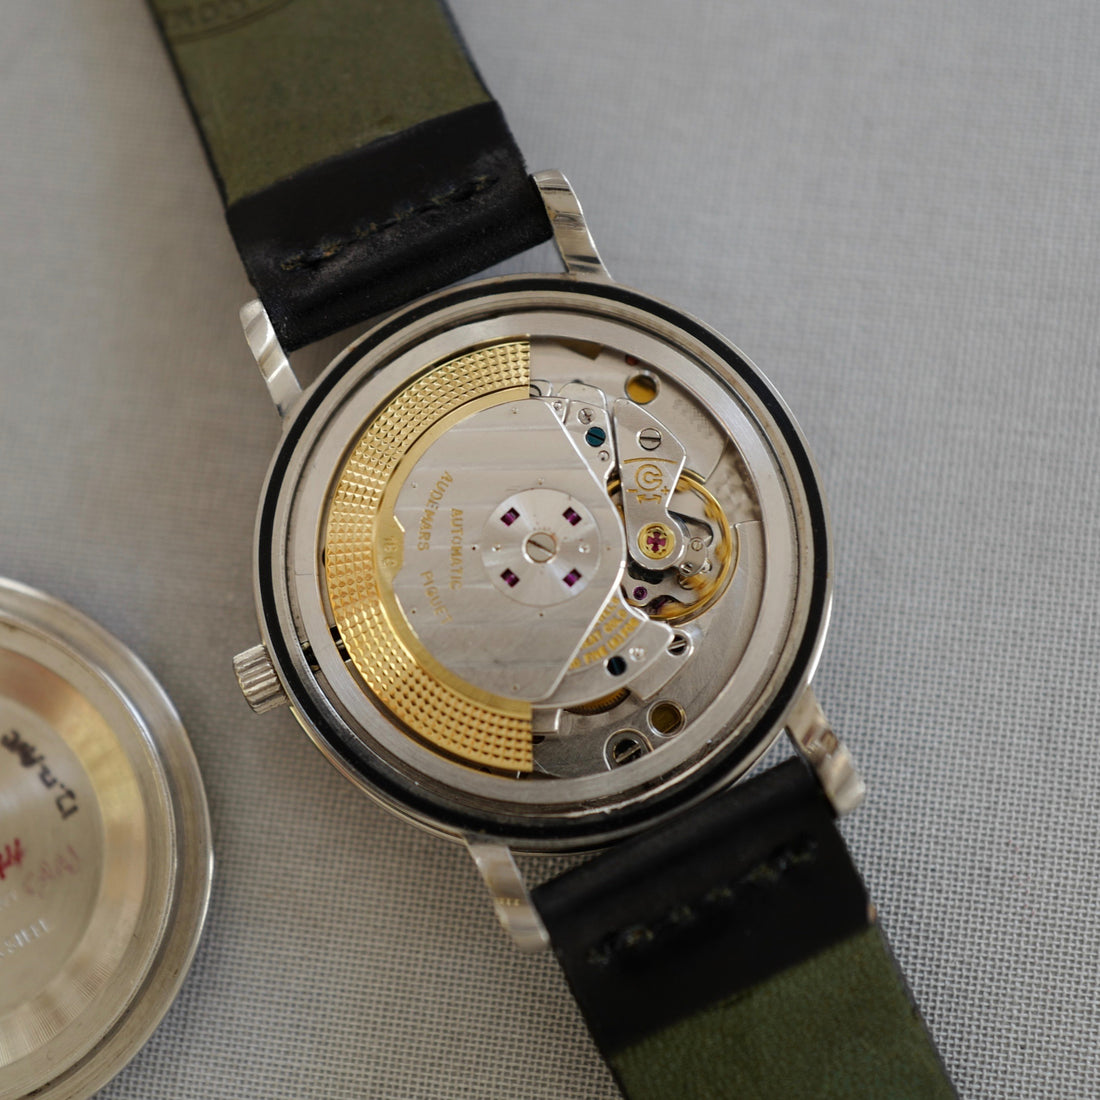 Audemars Piguet Steel Automatic Watch, Ref. 5281 with Original Warranty Papers